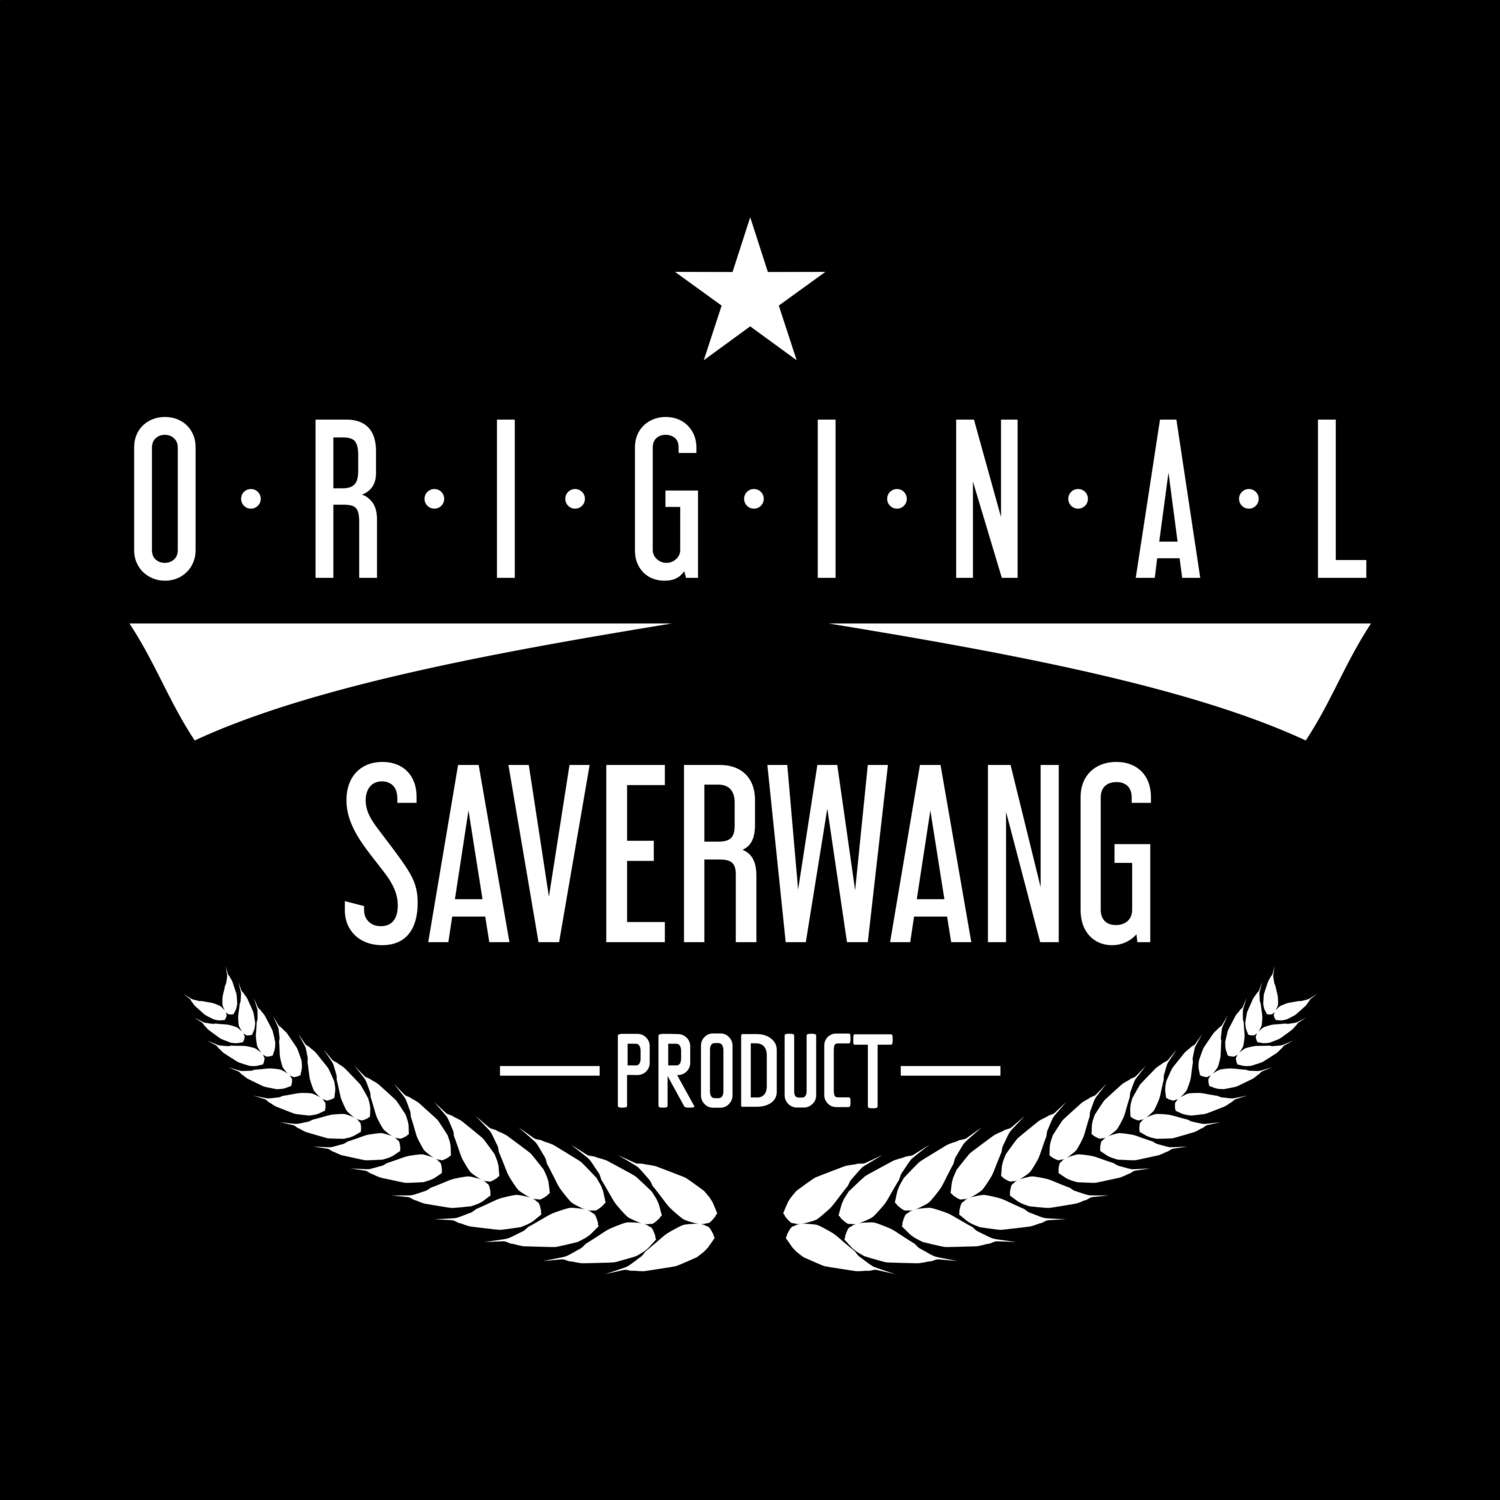 Saverwang T-Shirt »Original Product«